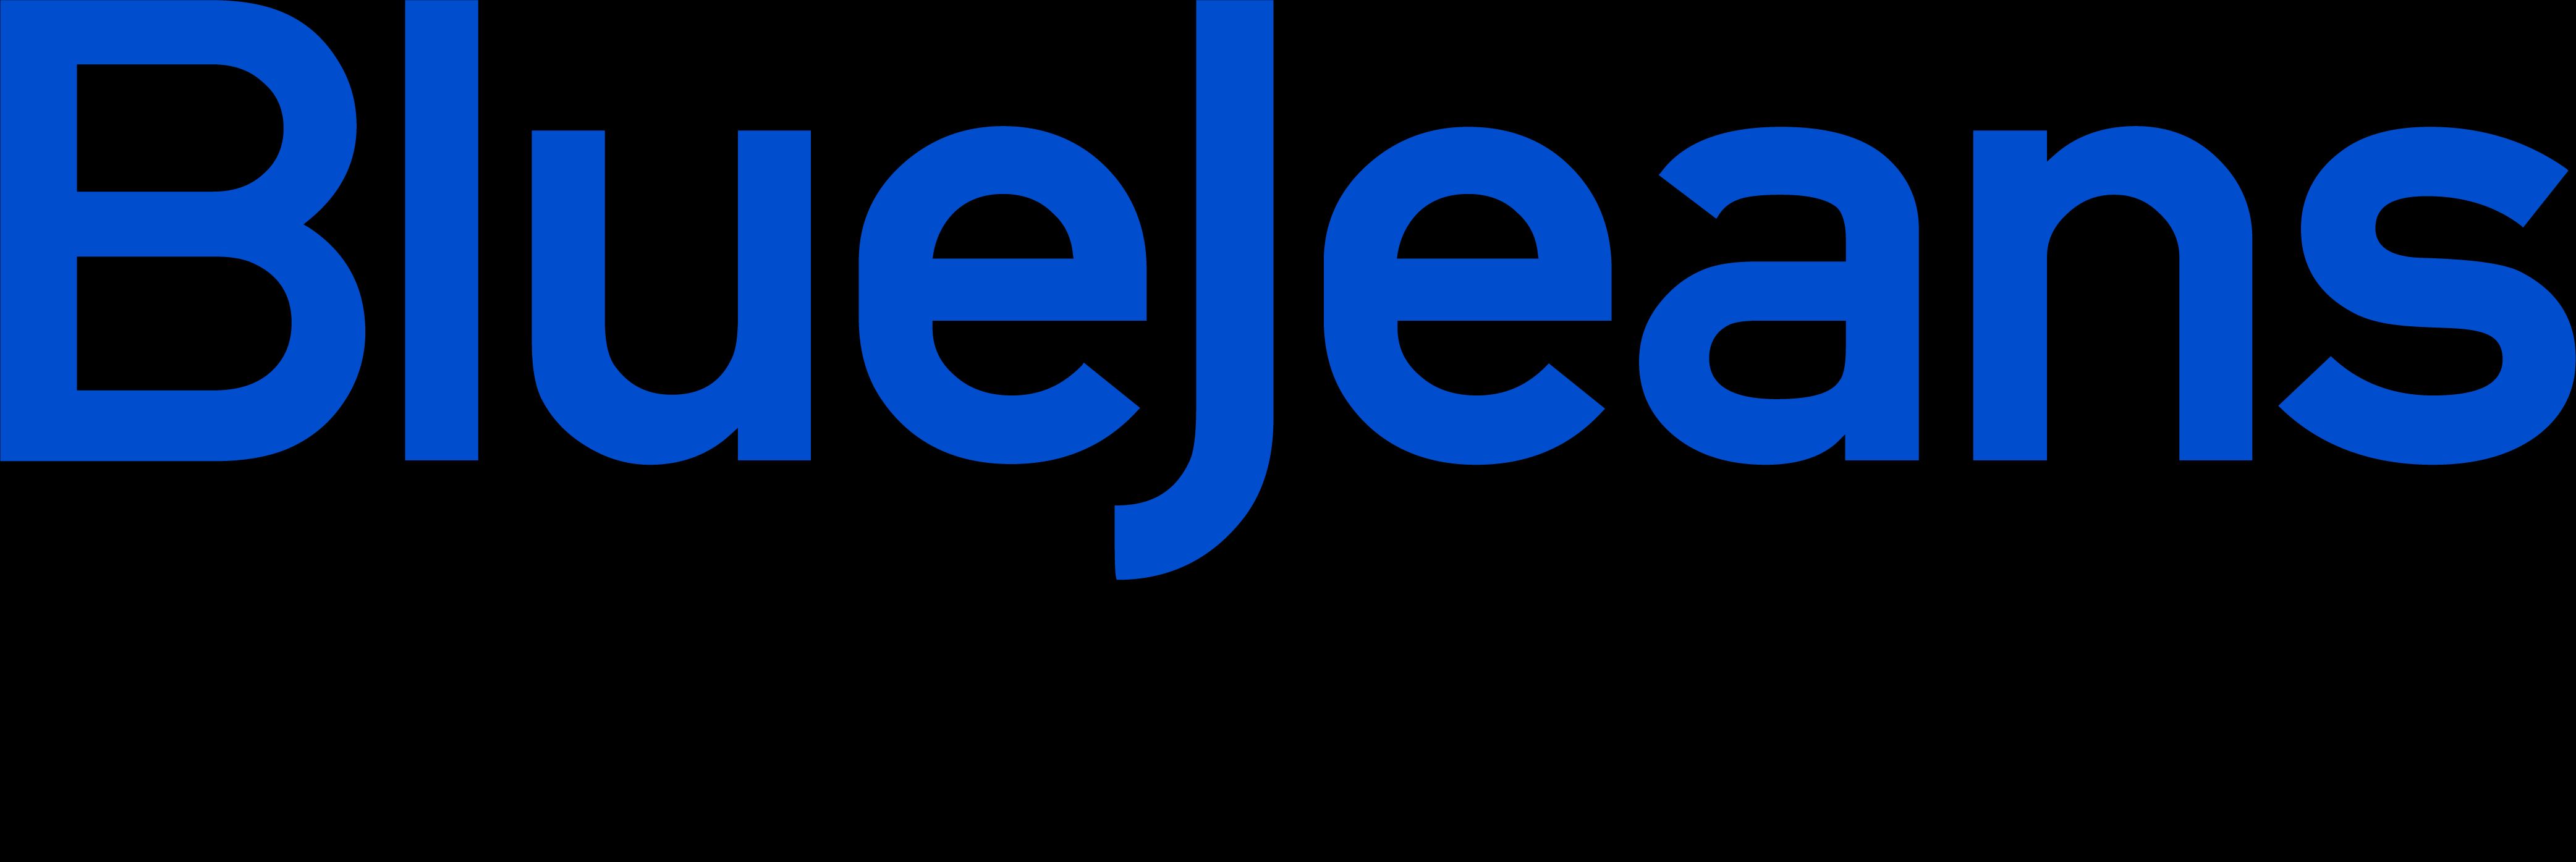 bluejeans-logo-blue-text